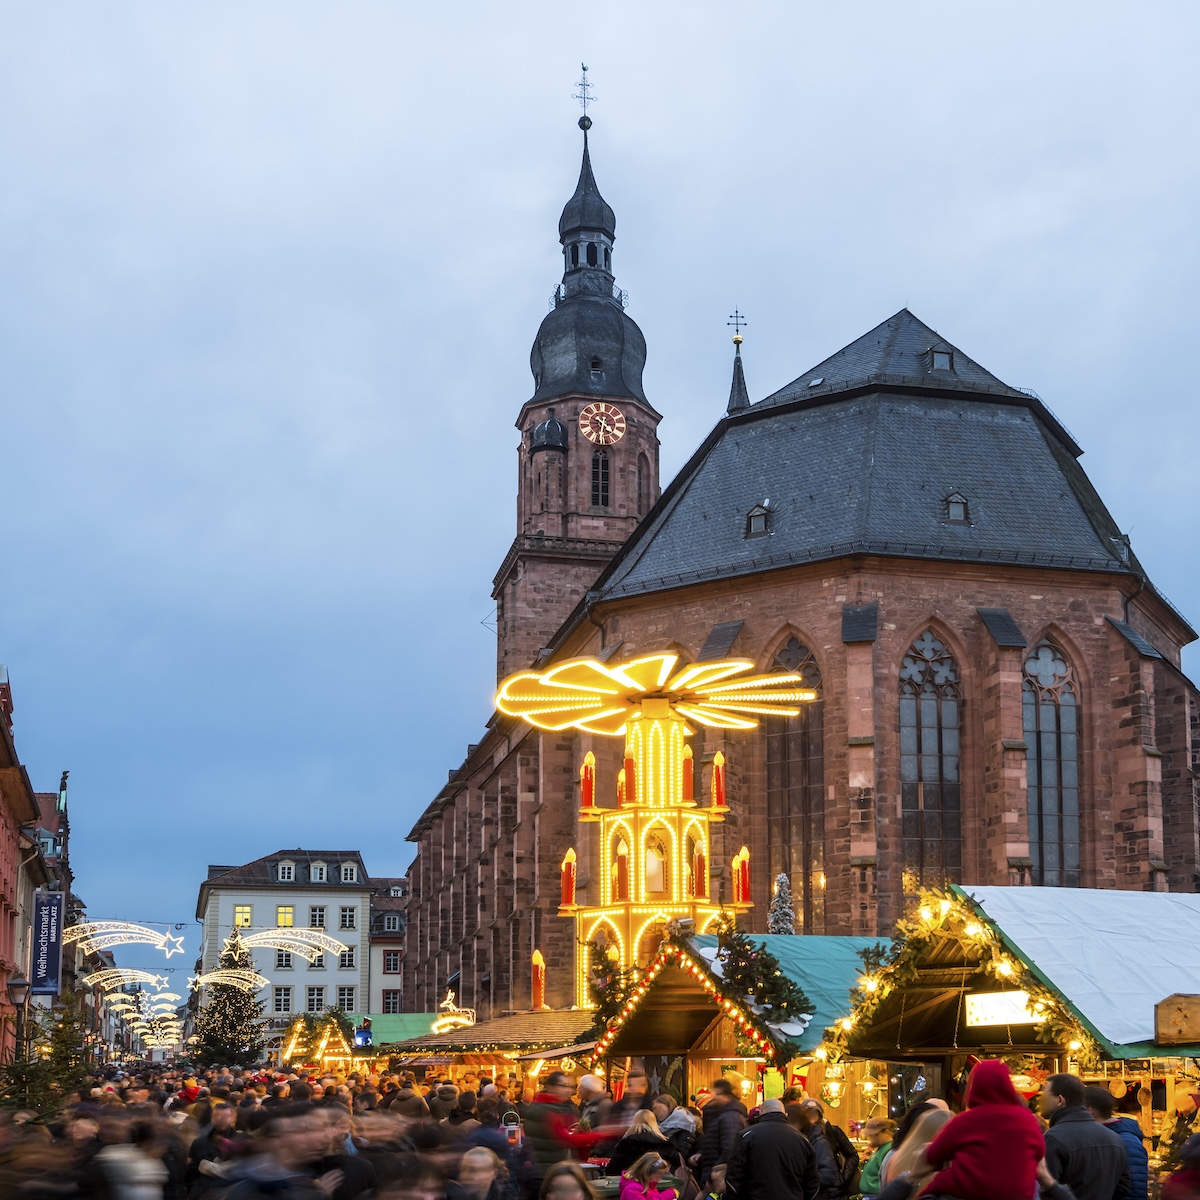 Christmas Market in Heidelberg, Germany